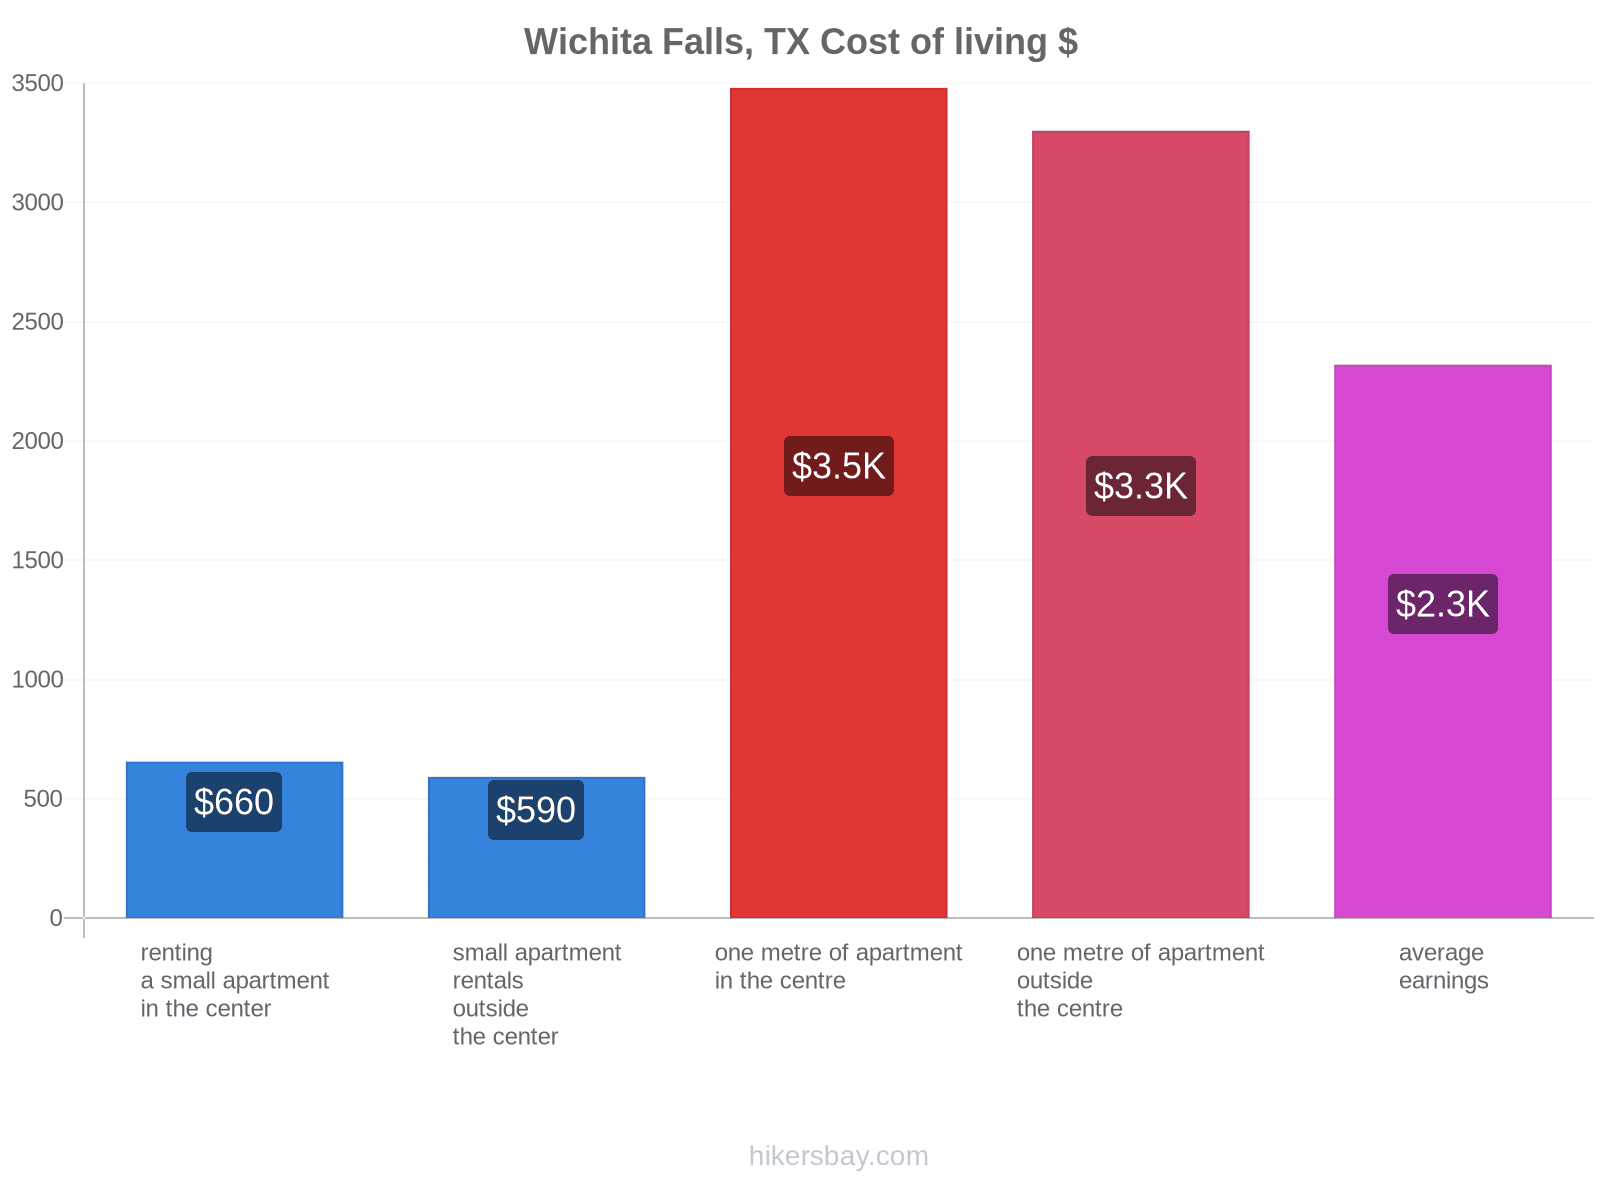 Wichita Falls, TX cost of living hikersbay.com